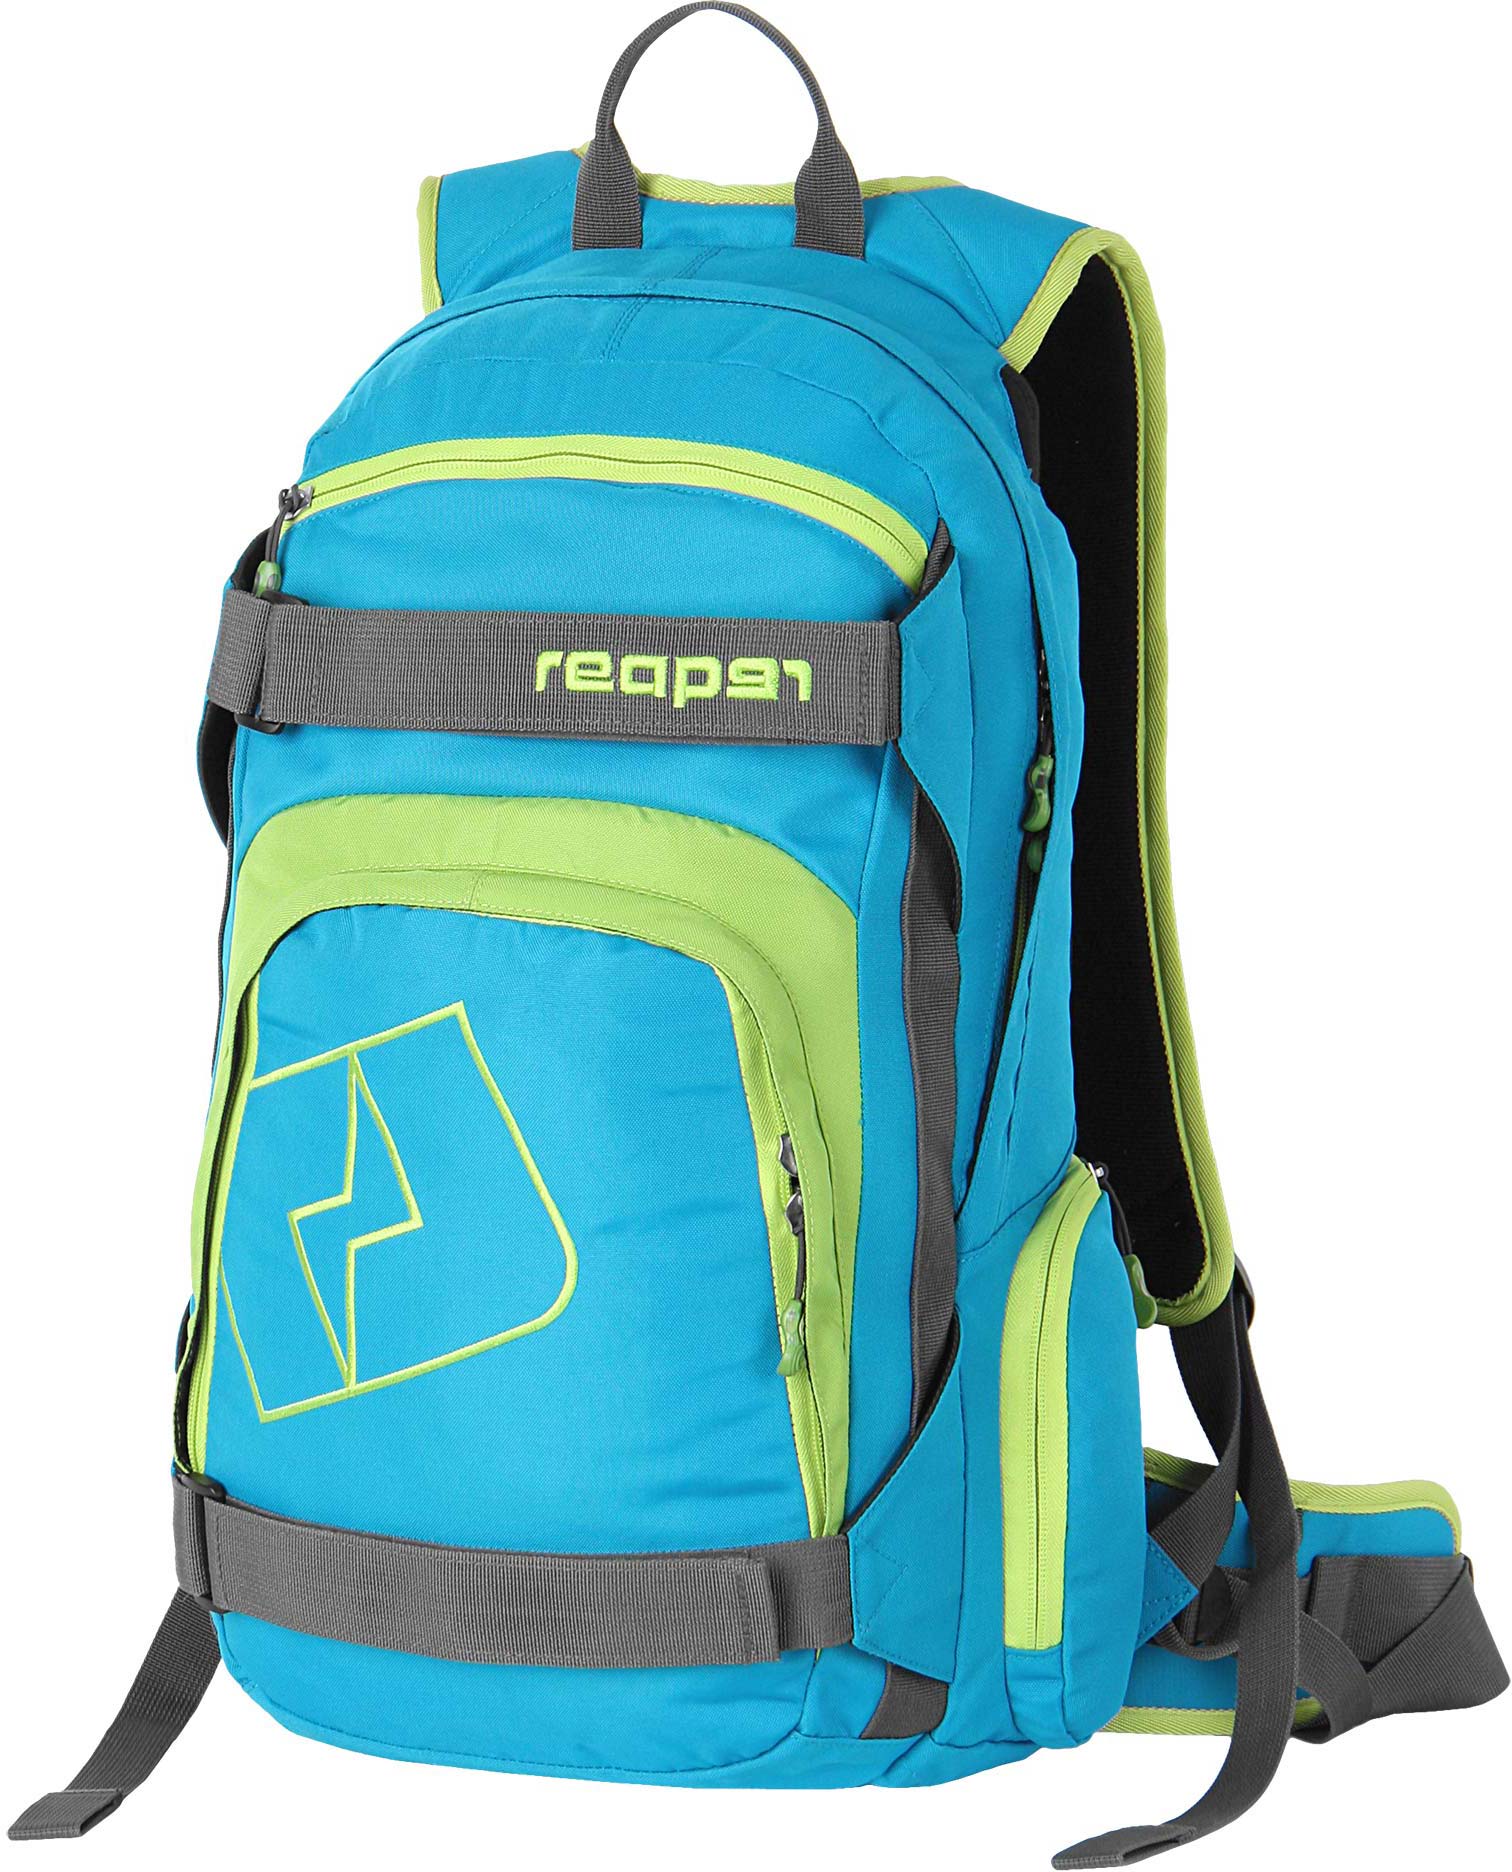 Snowboard backpack